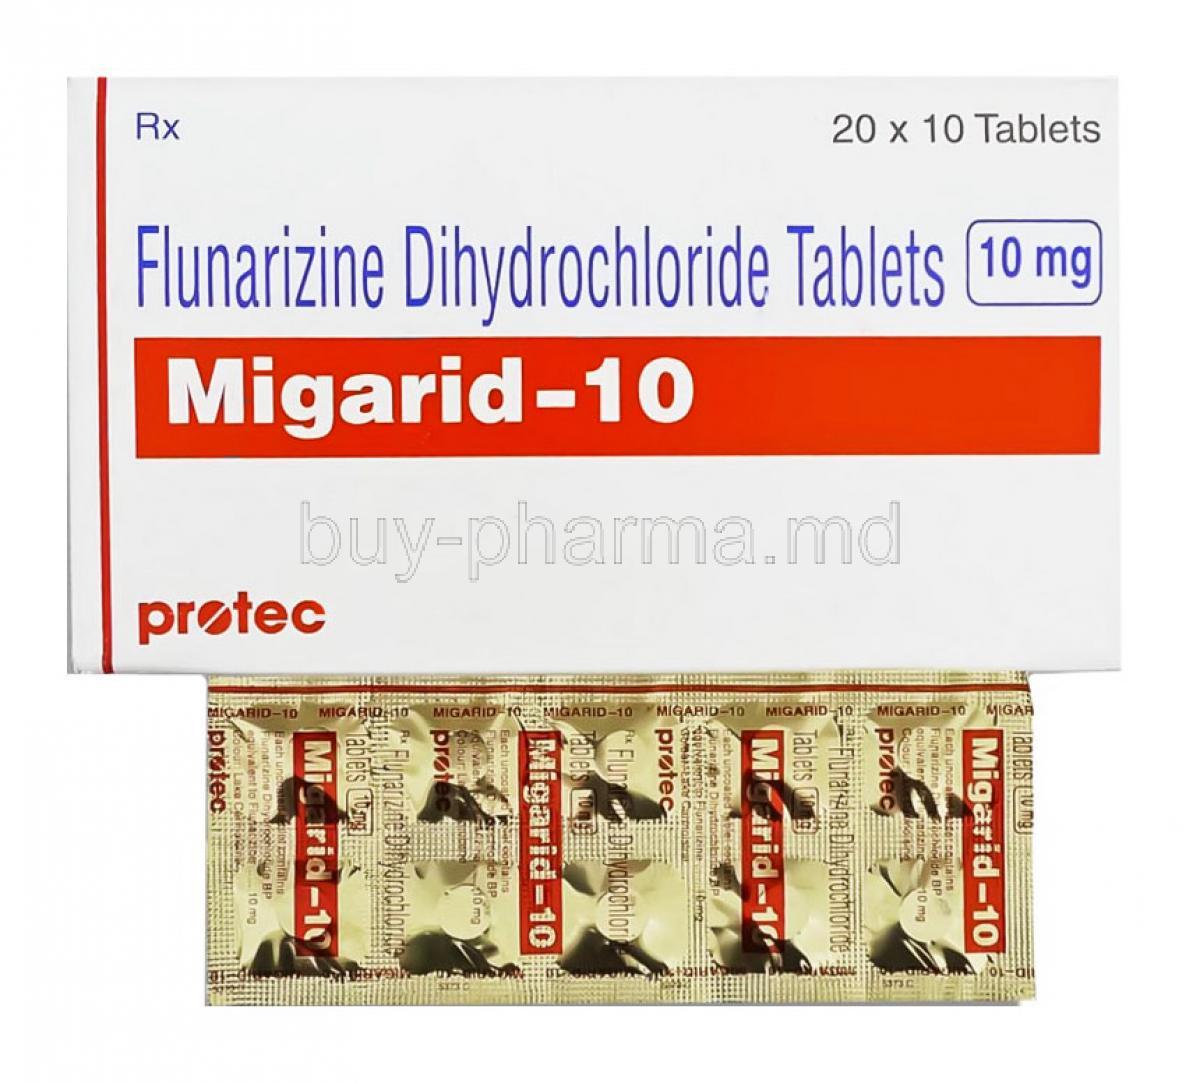 Migarid, Flunarizine box and tablets